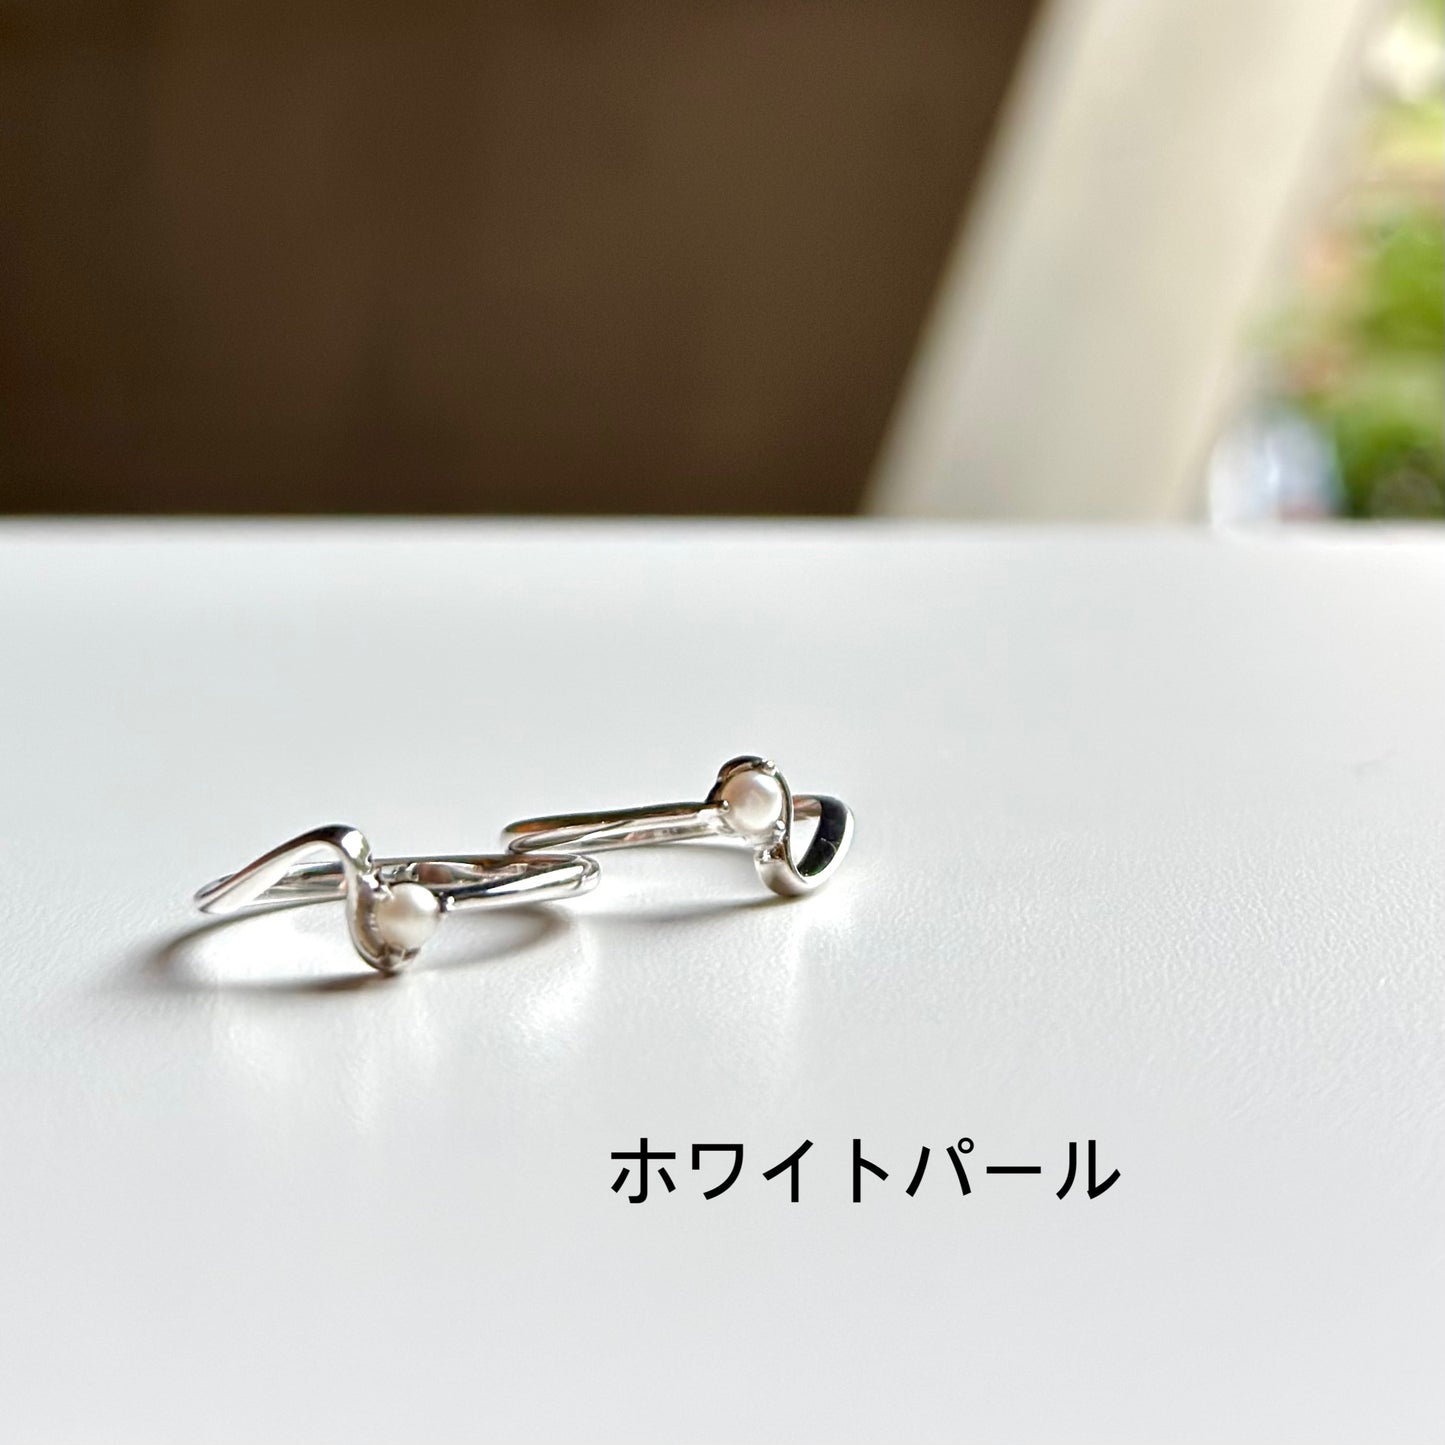 Silver925 petit design ring